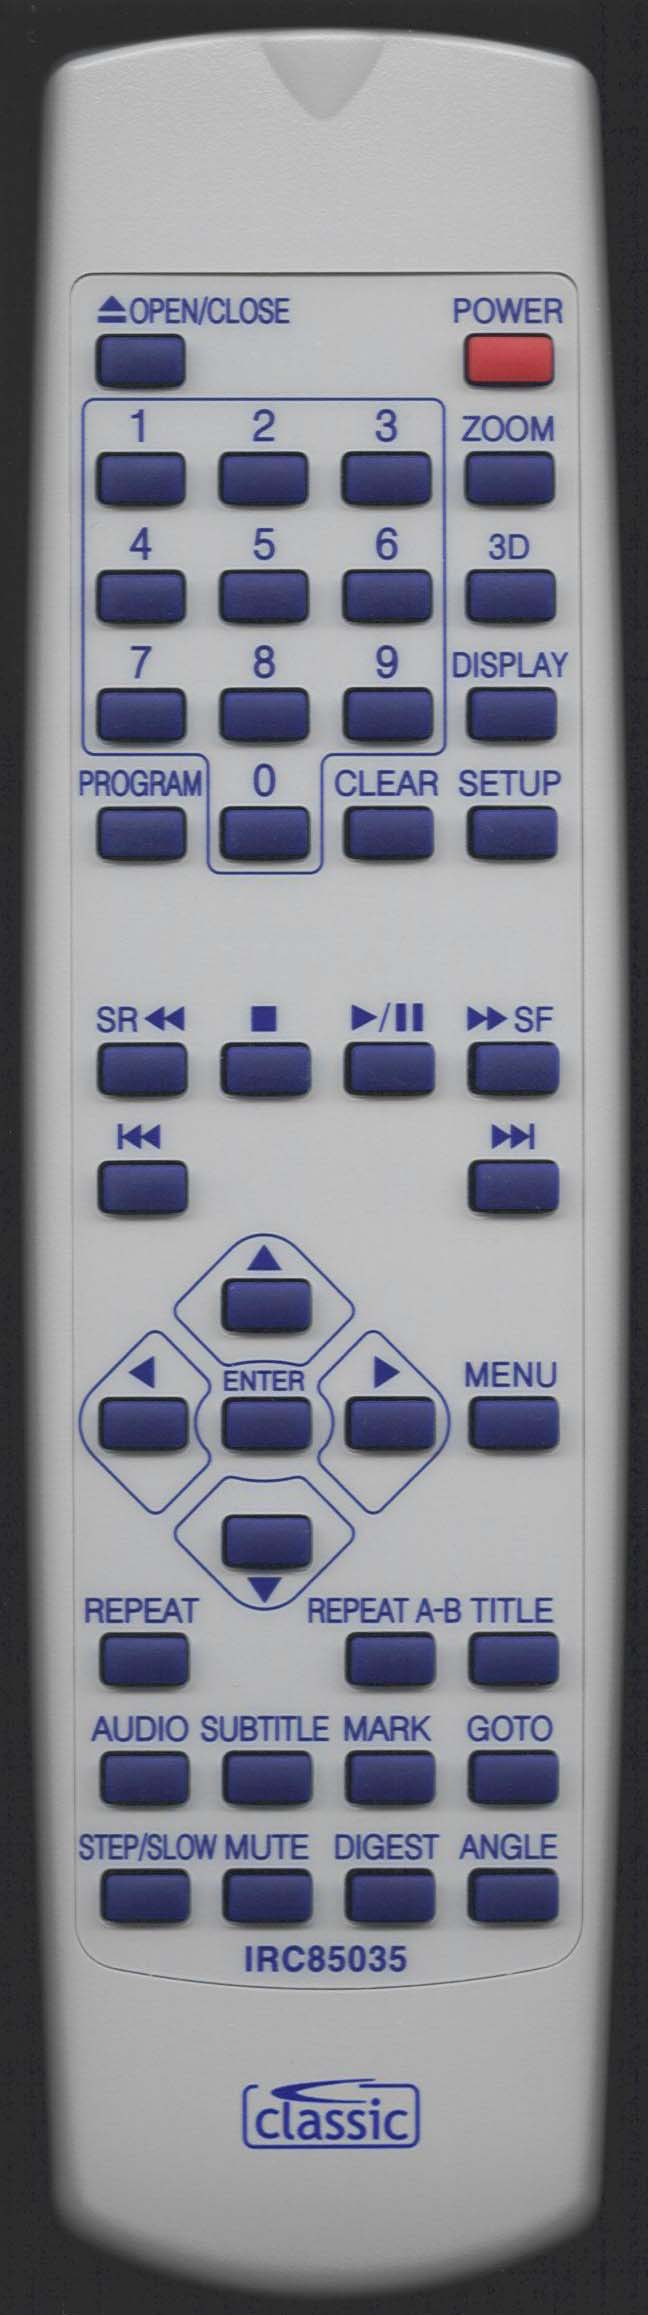 DMTECH DM 2010 Remote Control Alternative